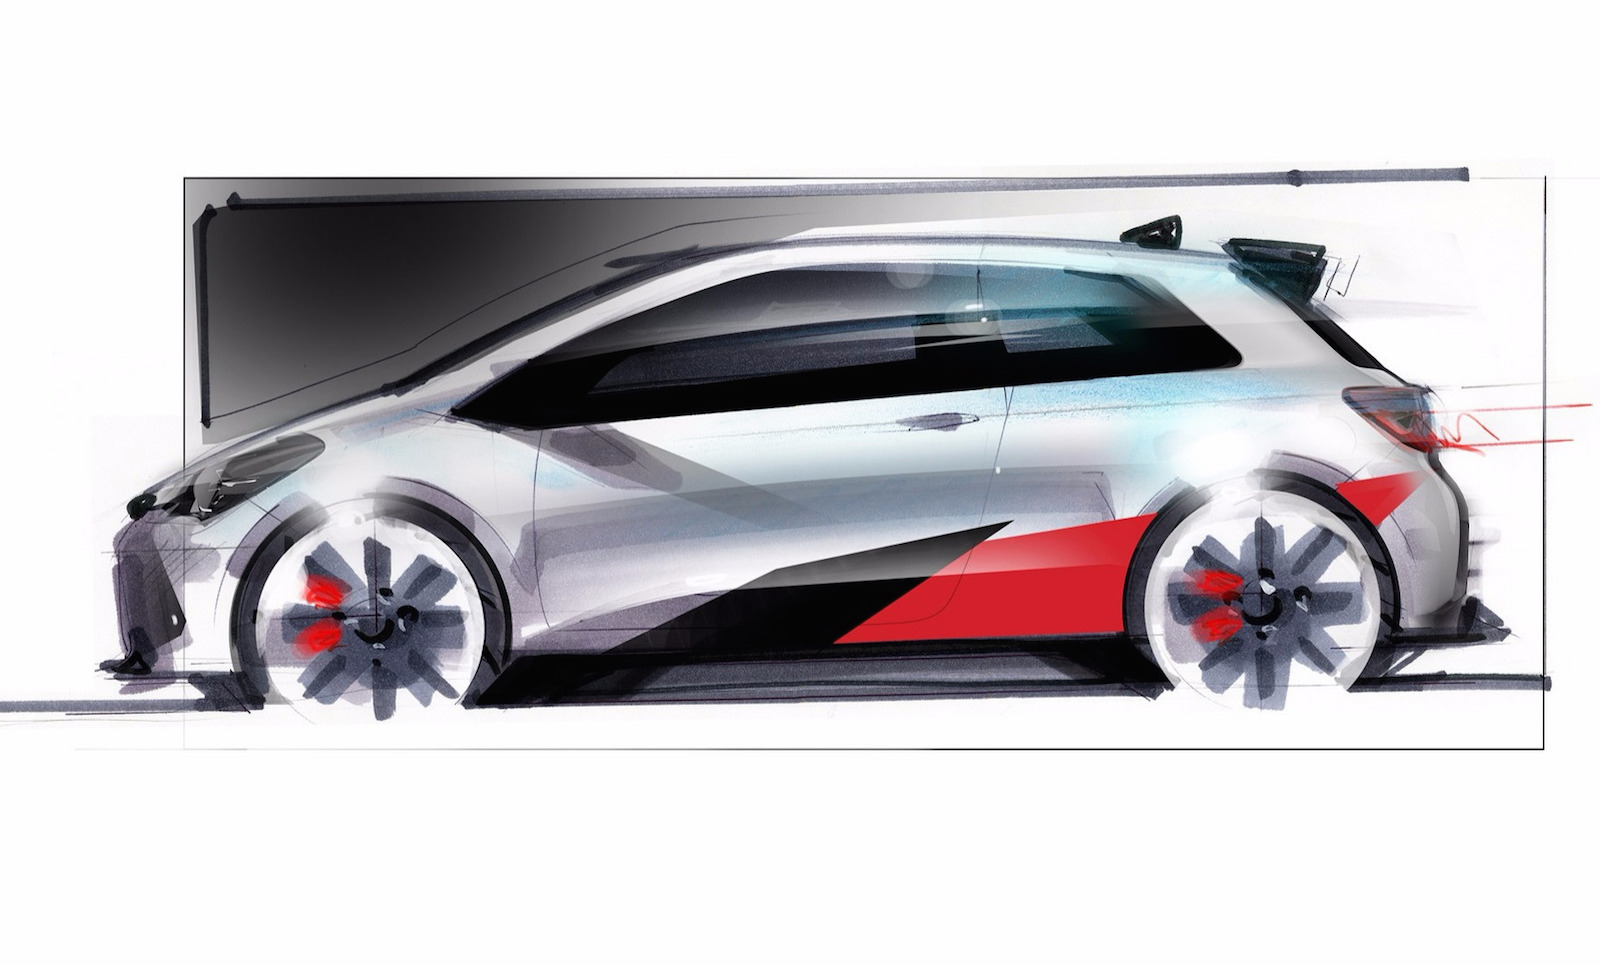 Toyota Yaris hot hatch road car confirmed, Gazoo to help